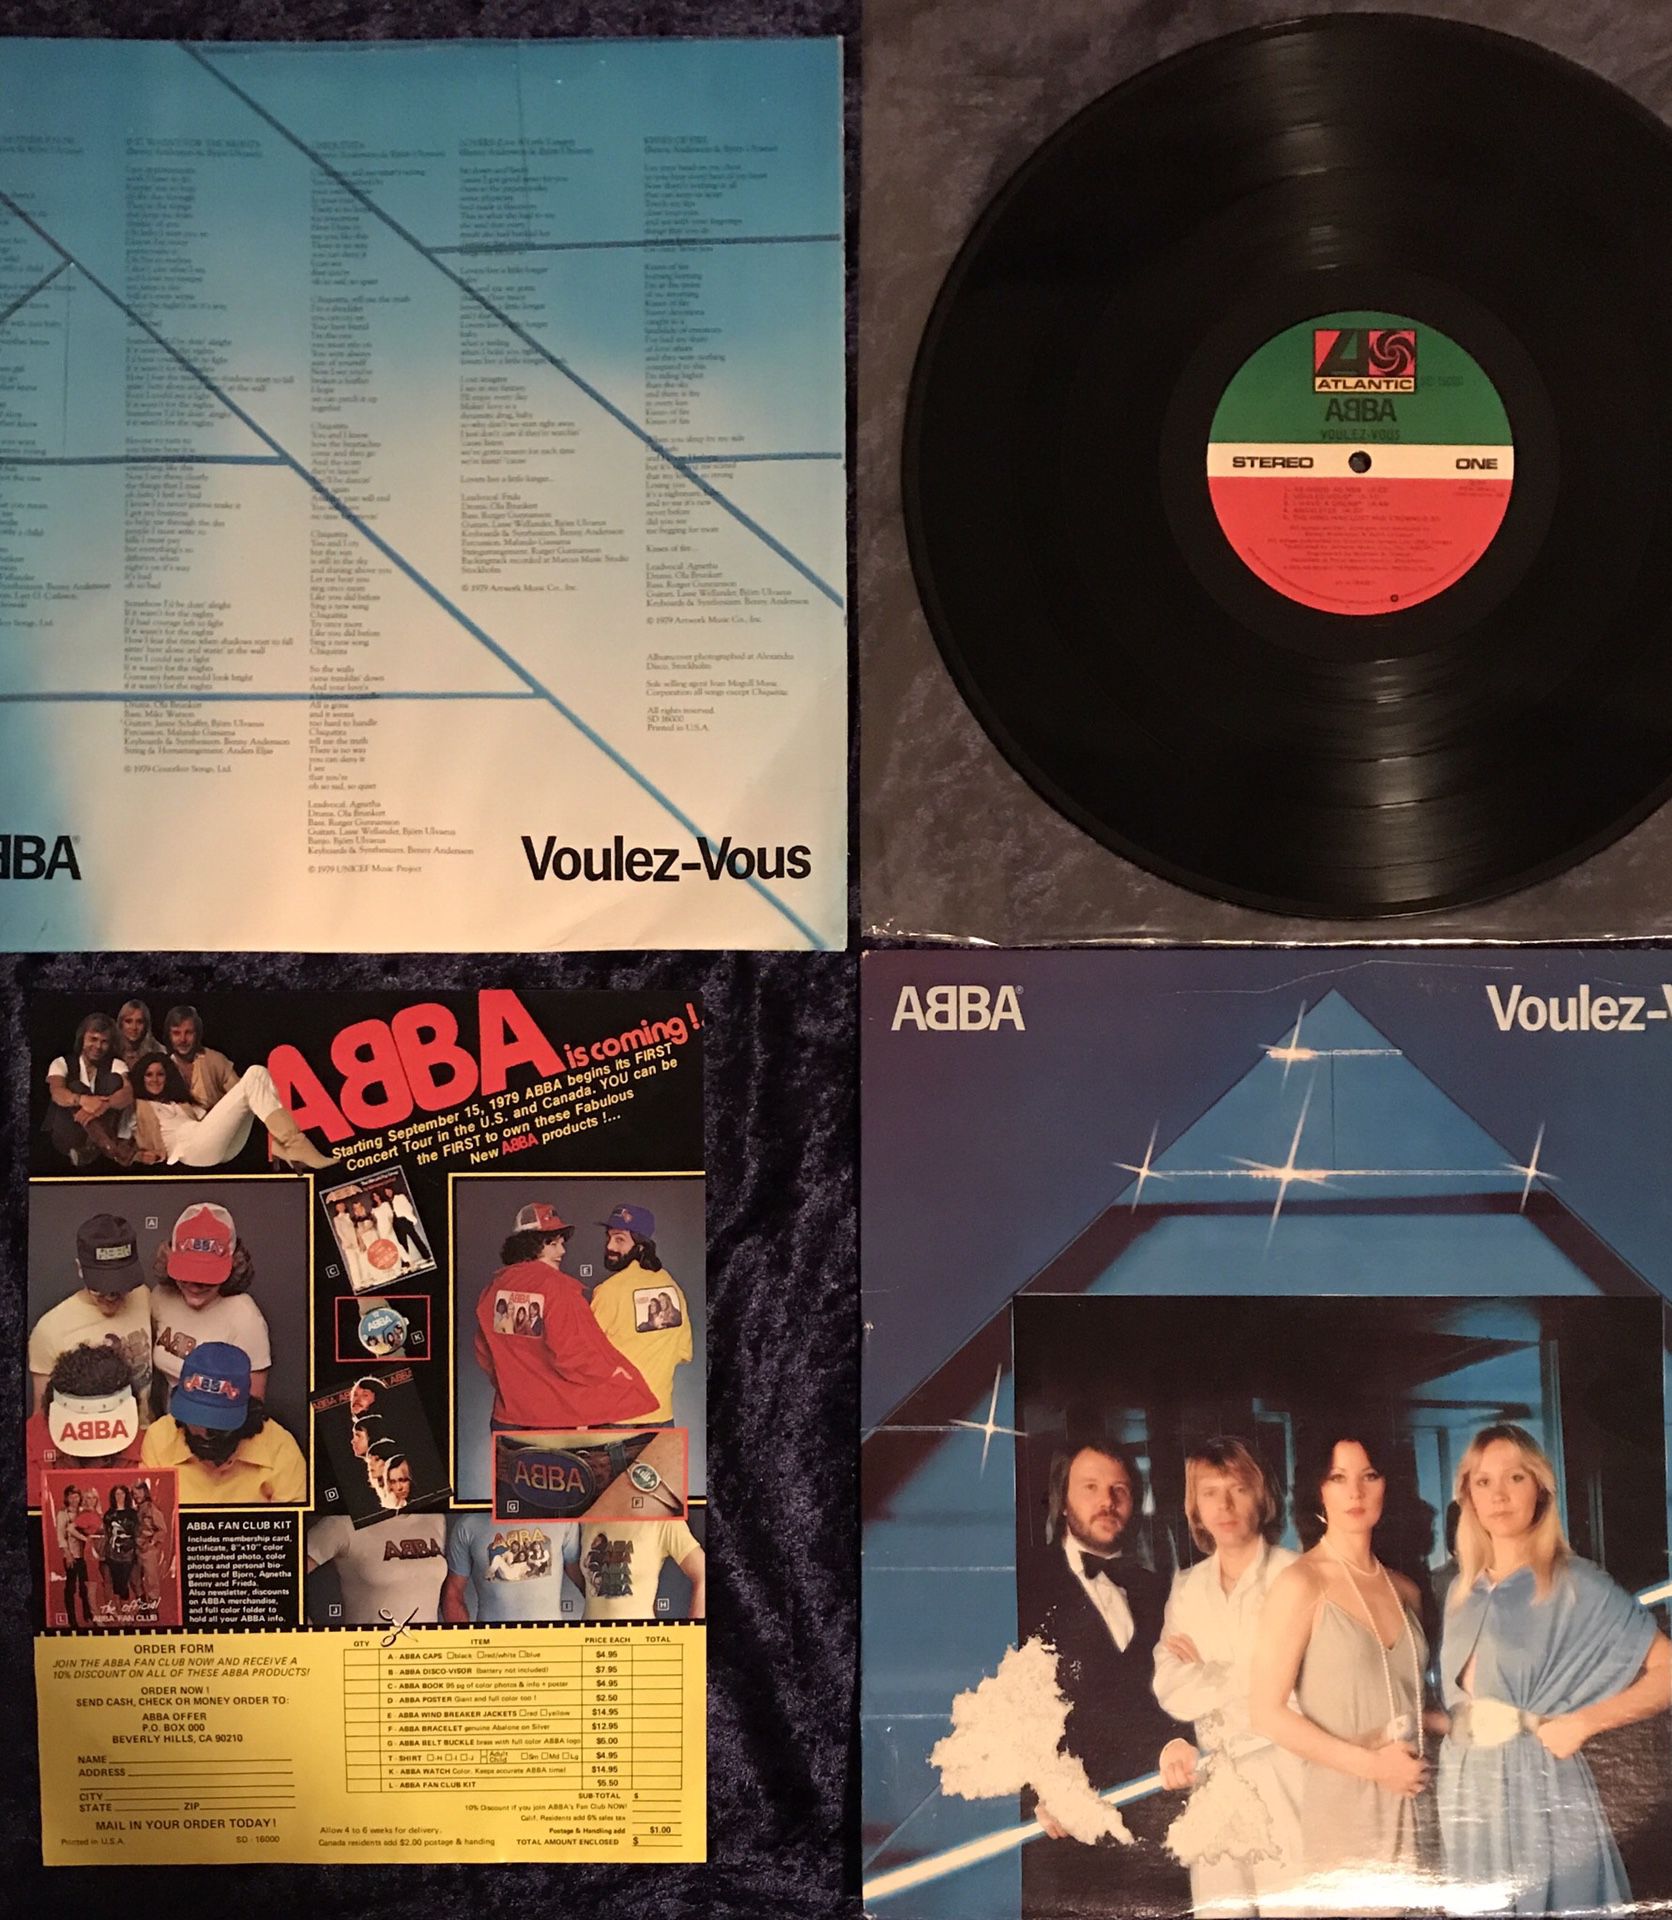 ABBA - Voulez-Vous -LP 79 ATLANTIC -VG- ORIG HEAVY INNER +70's MERCH ORDER FORM